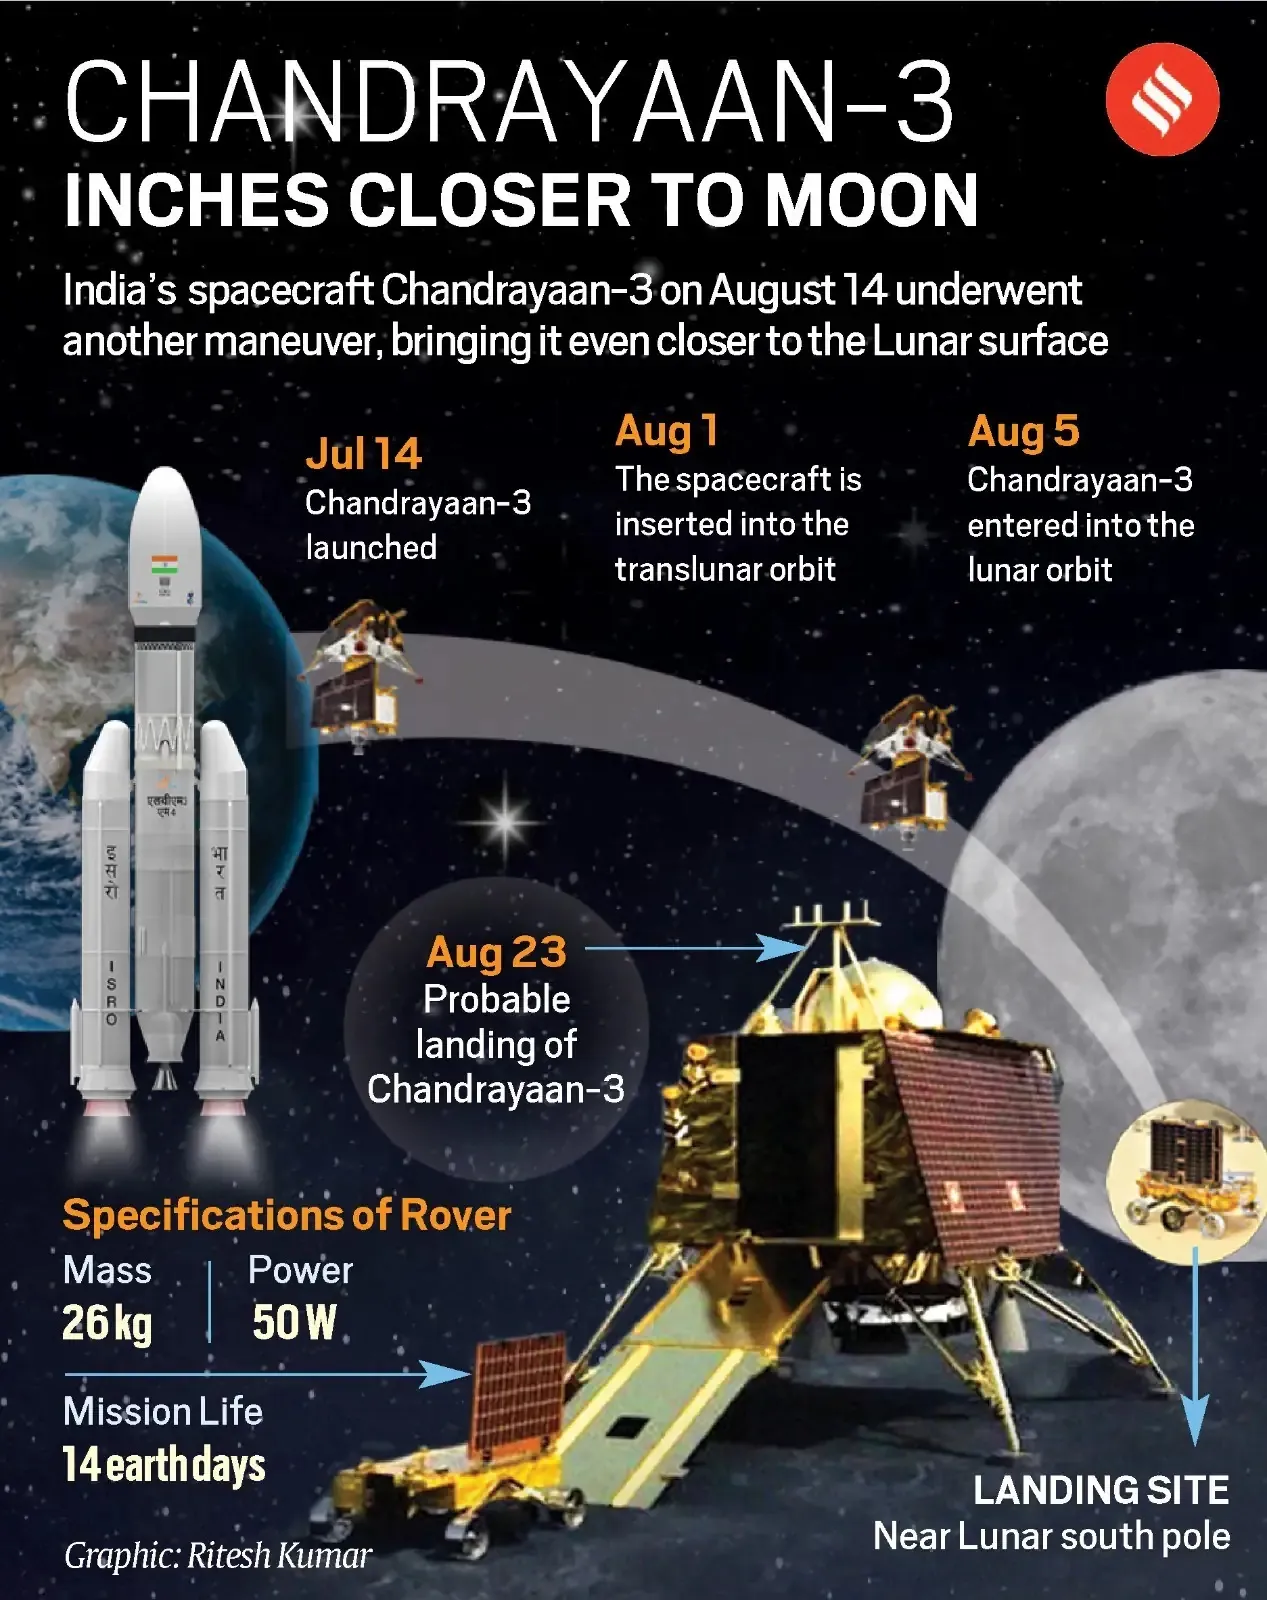 Chandrayaan 3 lunar mission 